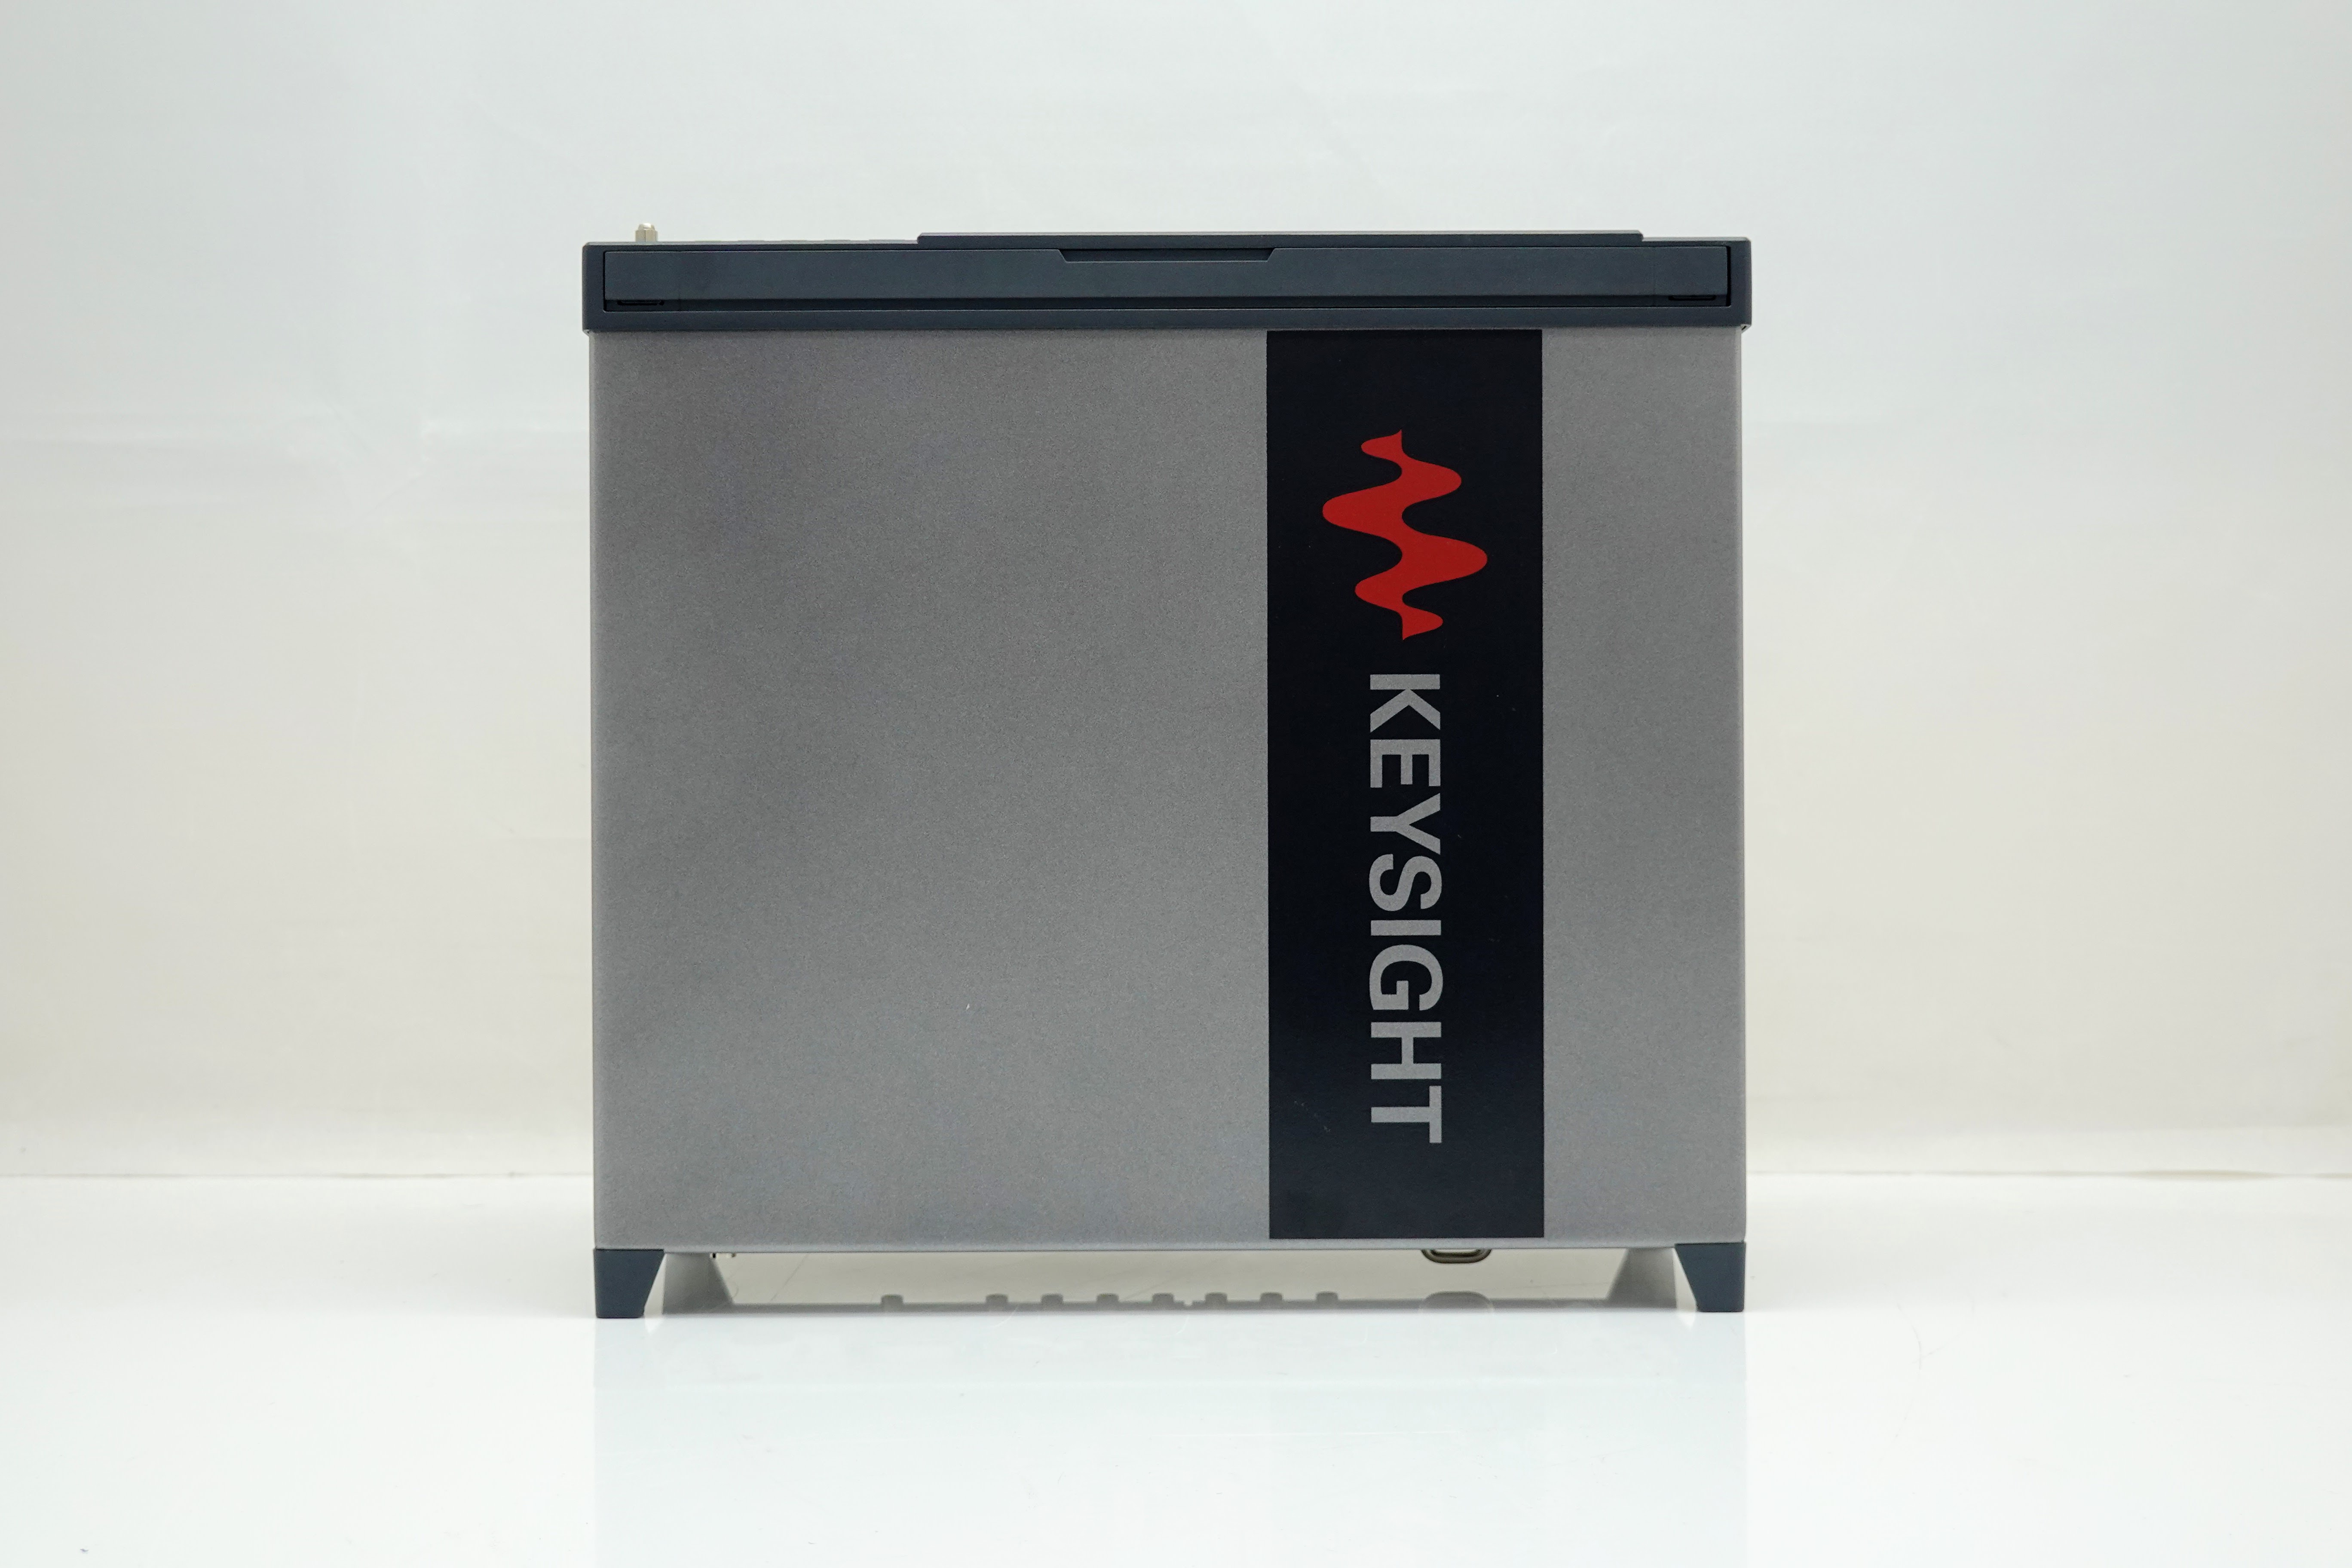 Keysight N9020B-550 10 Hz to 50 GHz